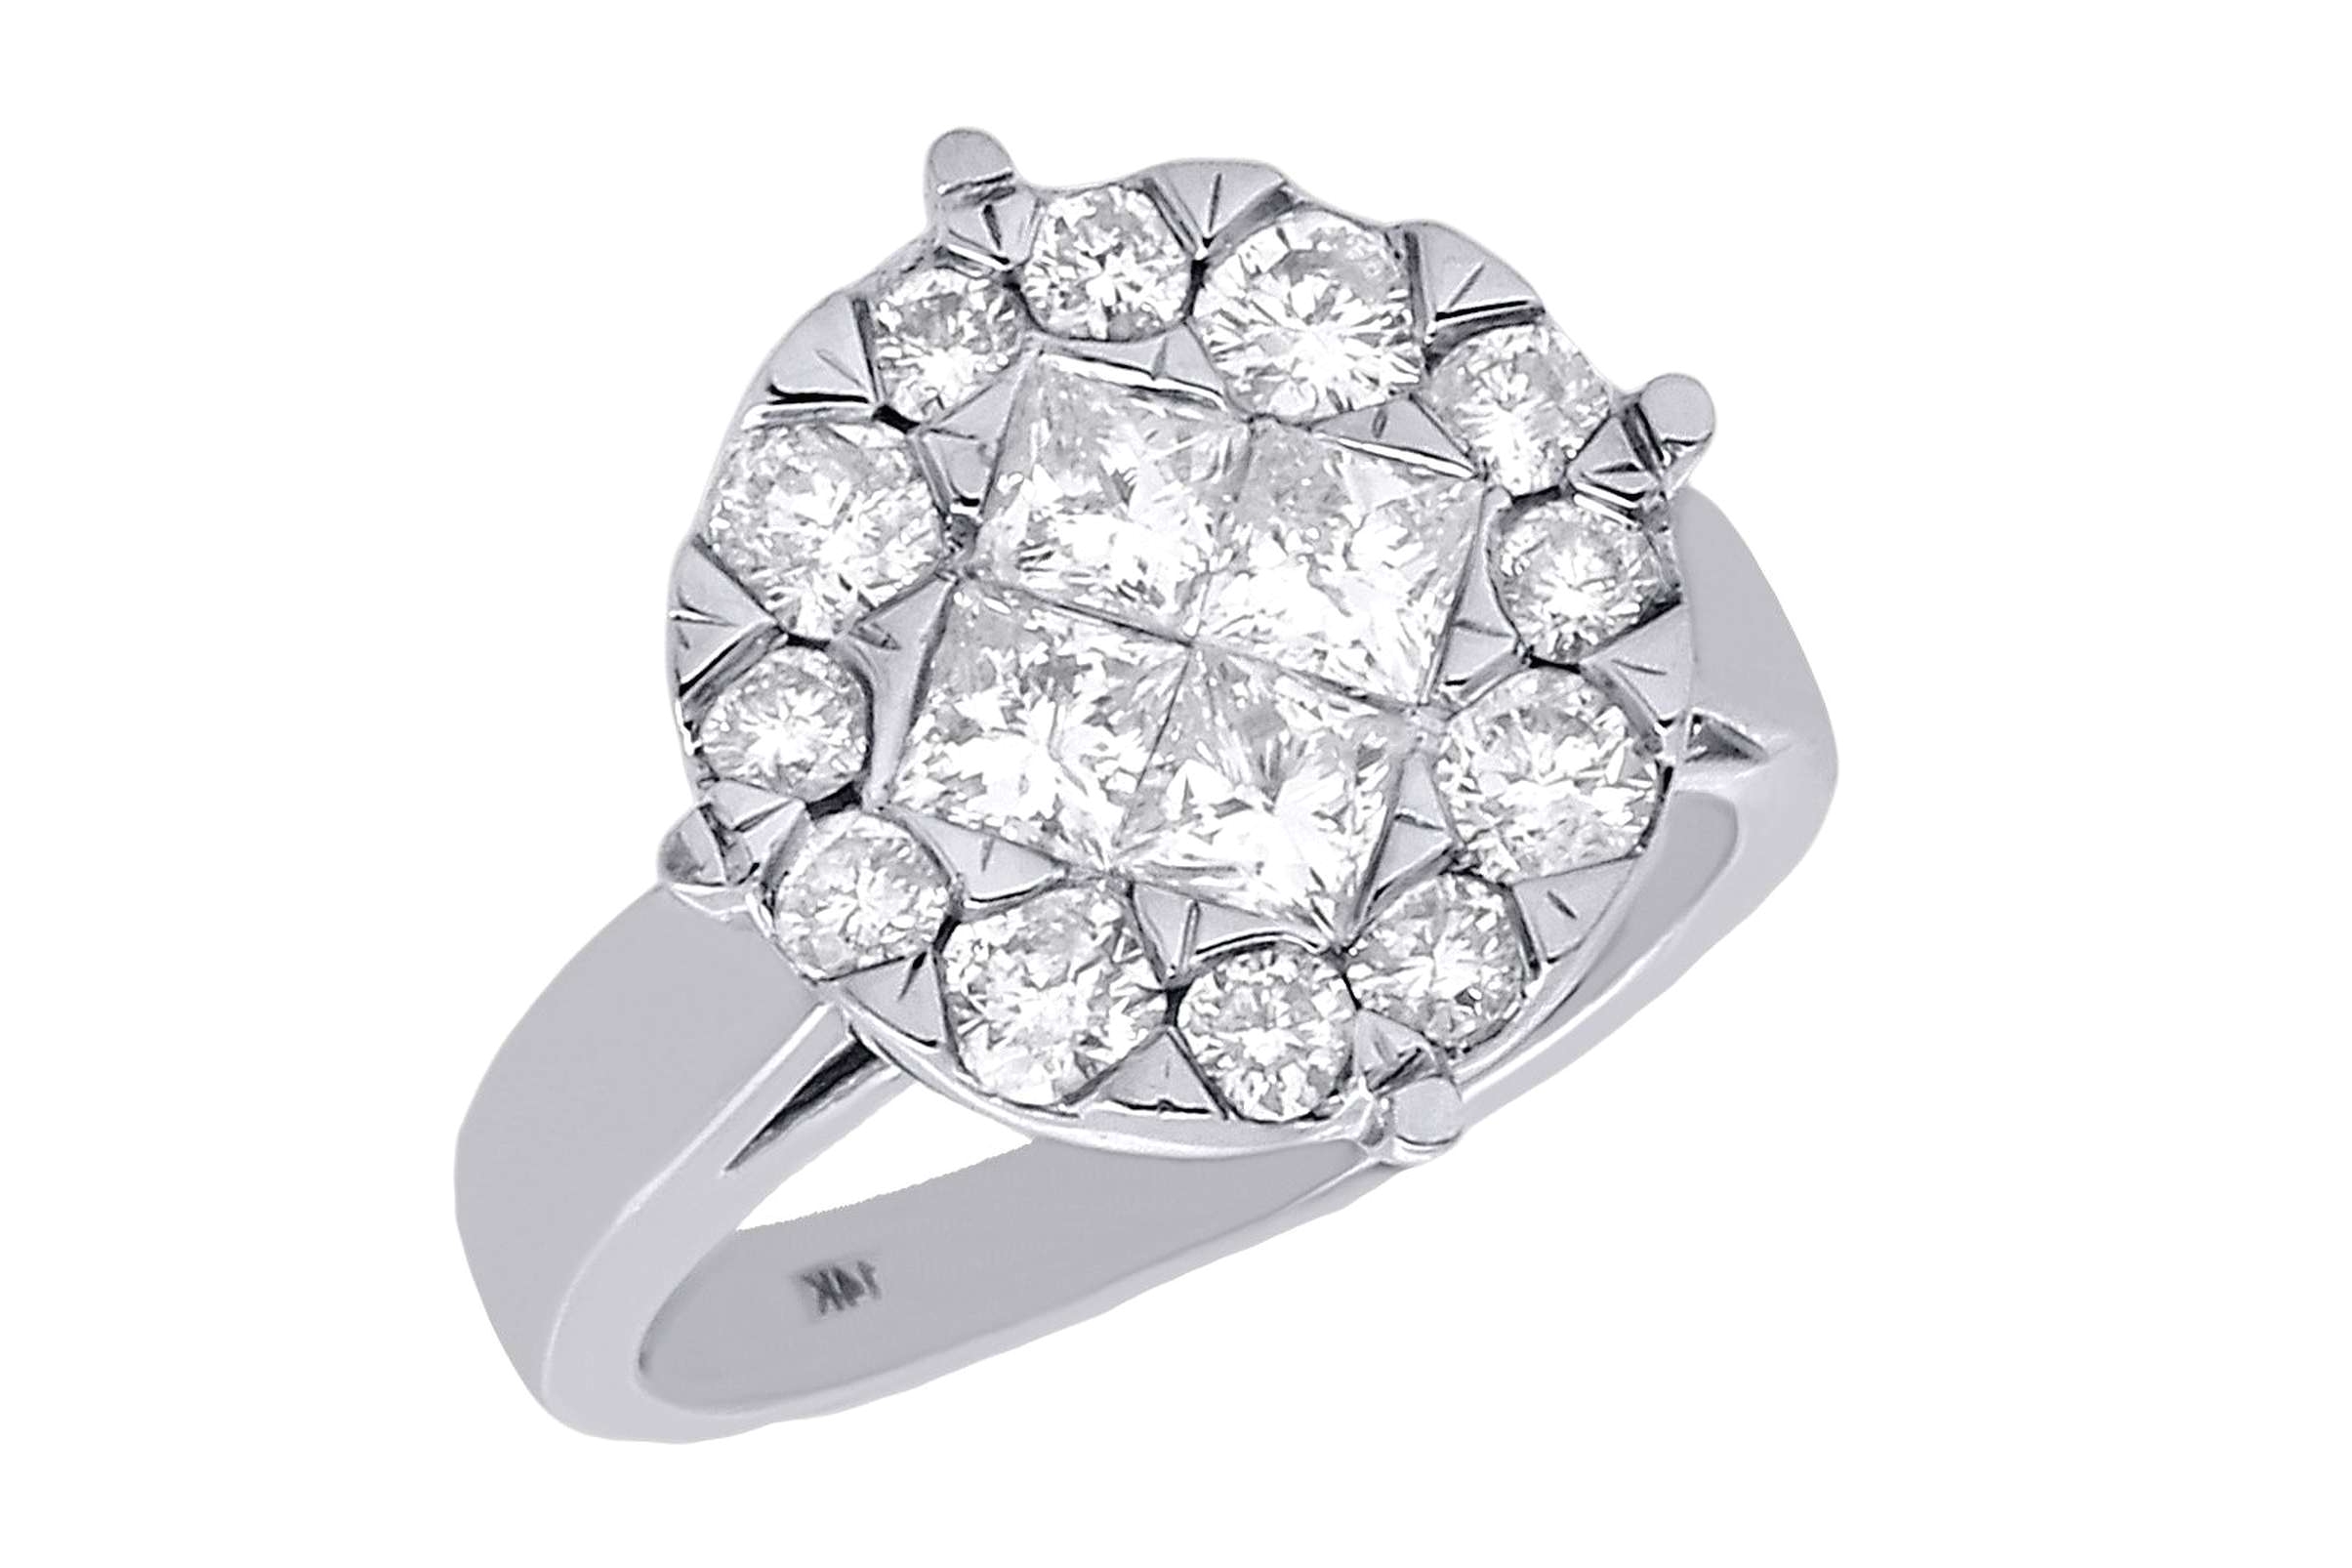 graceful engagement rings light blue diamonds on a 4 25 carat oval sapphire with halo od surrounding diamonds